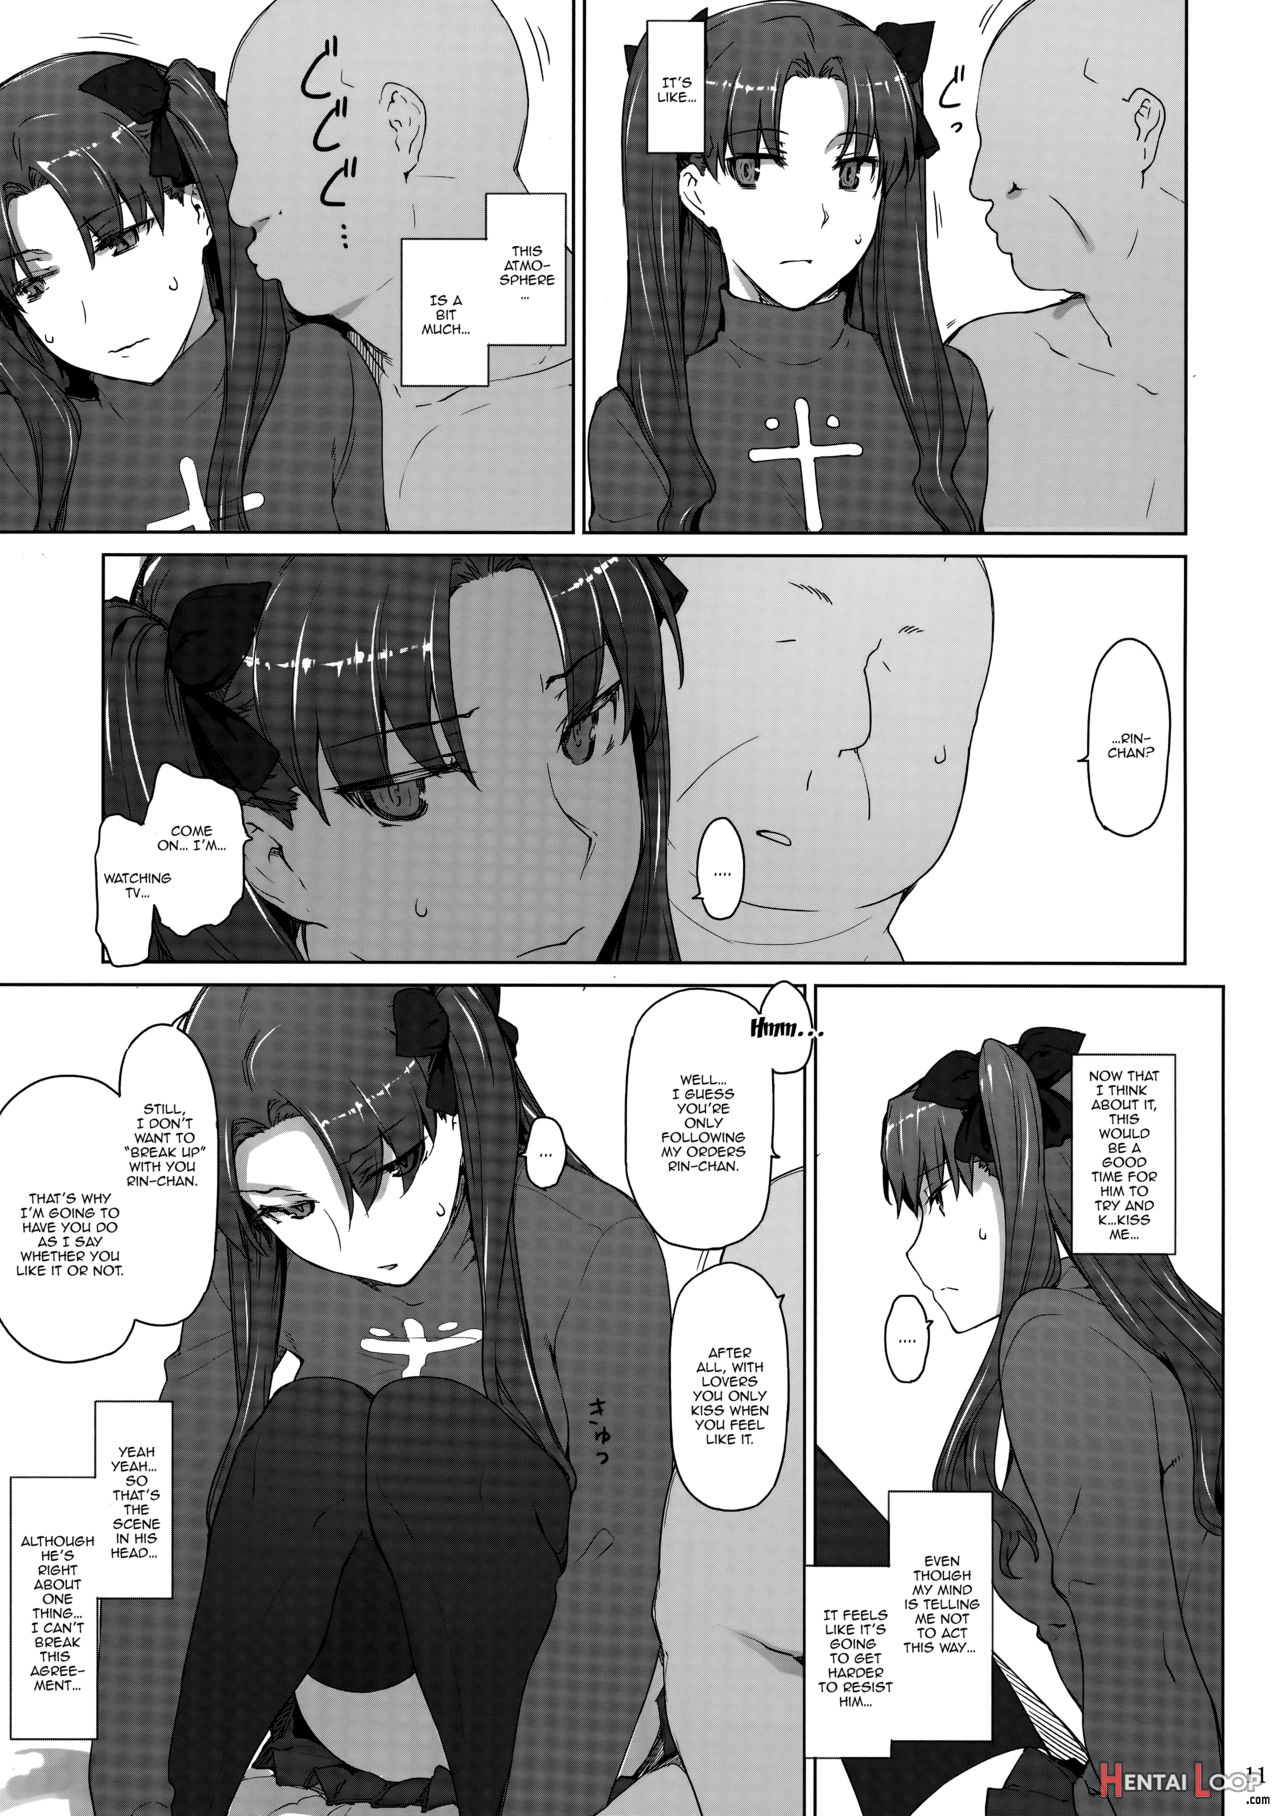 Tohsaka-ke No Kakei Jijou 10 page 10